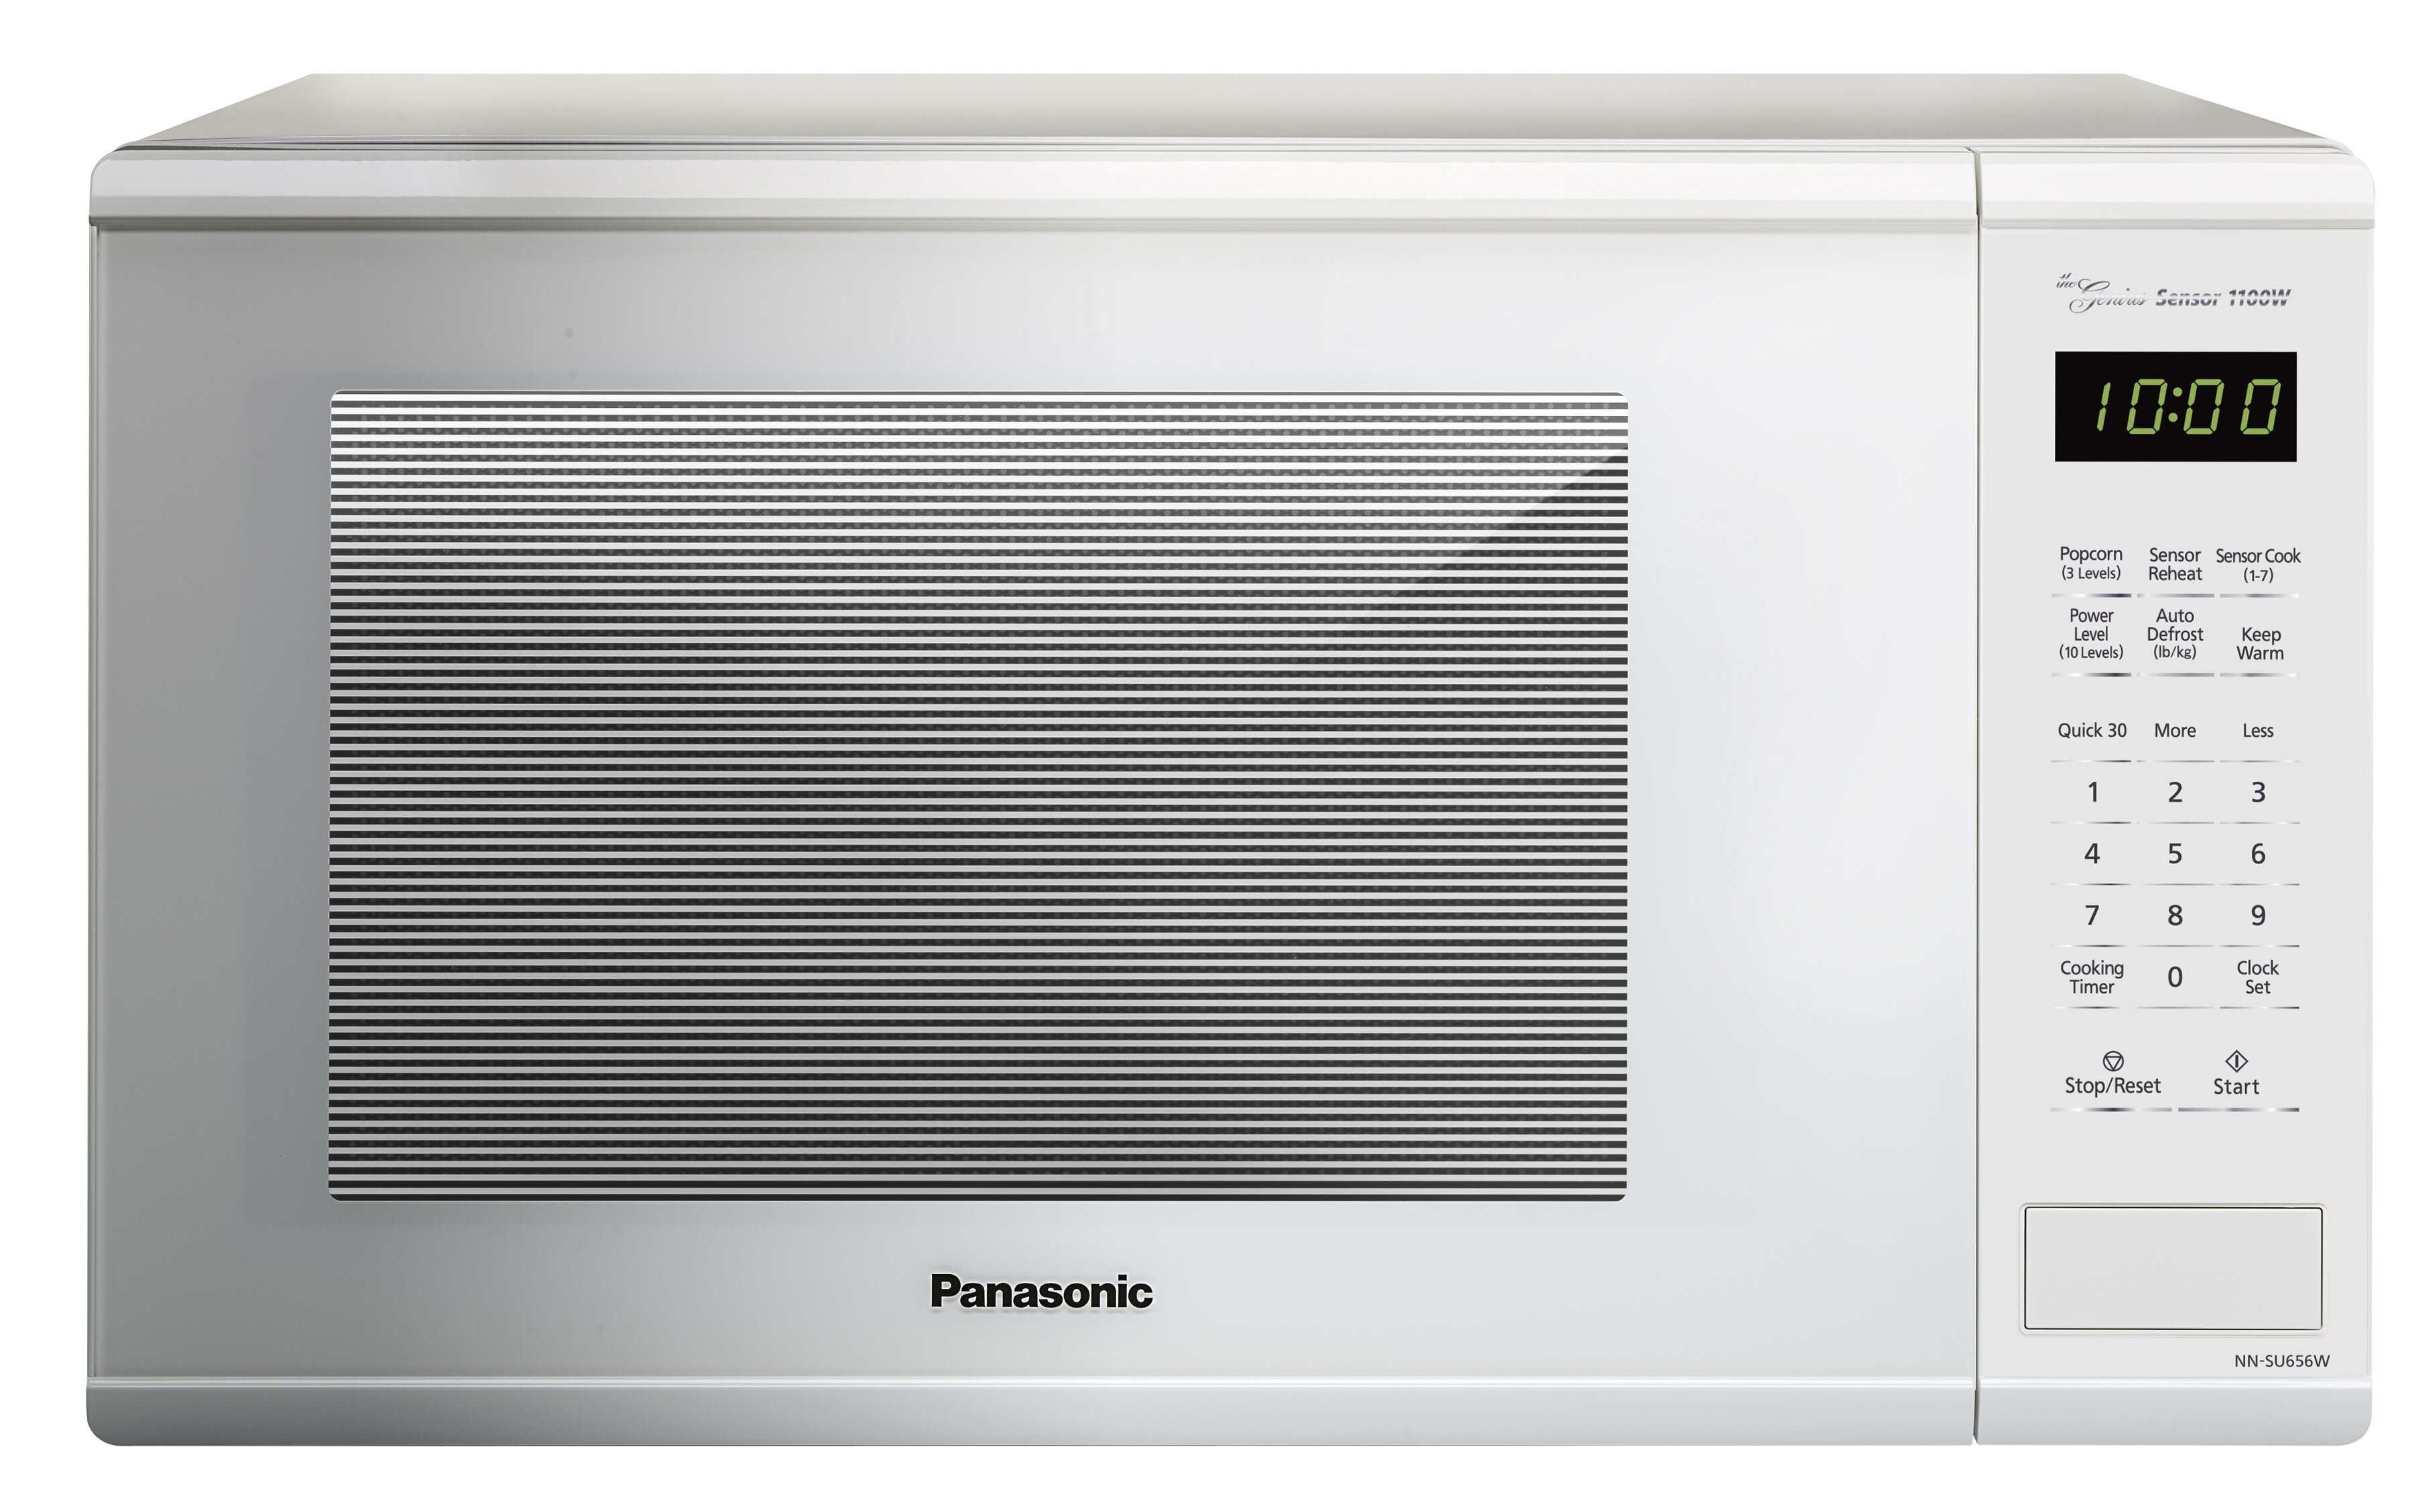 Panasonic 16 1 3 Cu Ft Countertop Microwave Reviews Wayfair